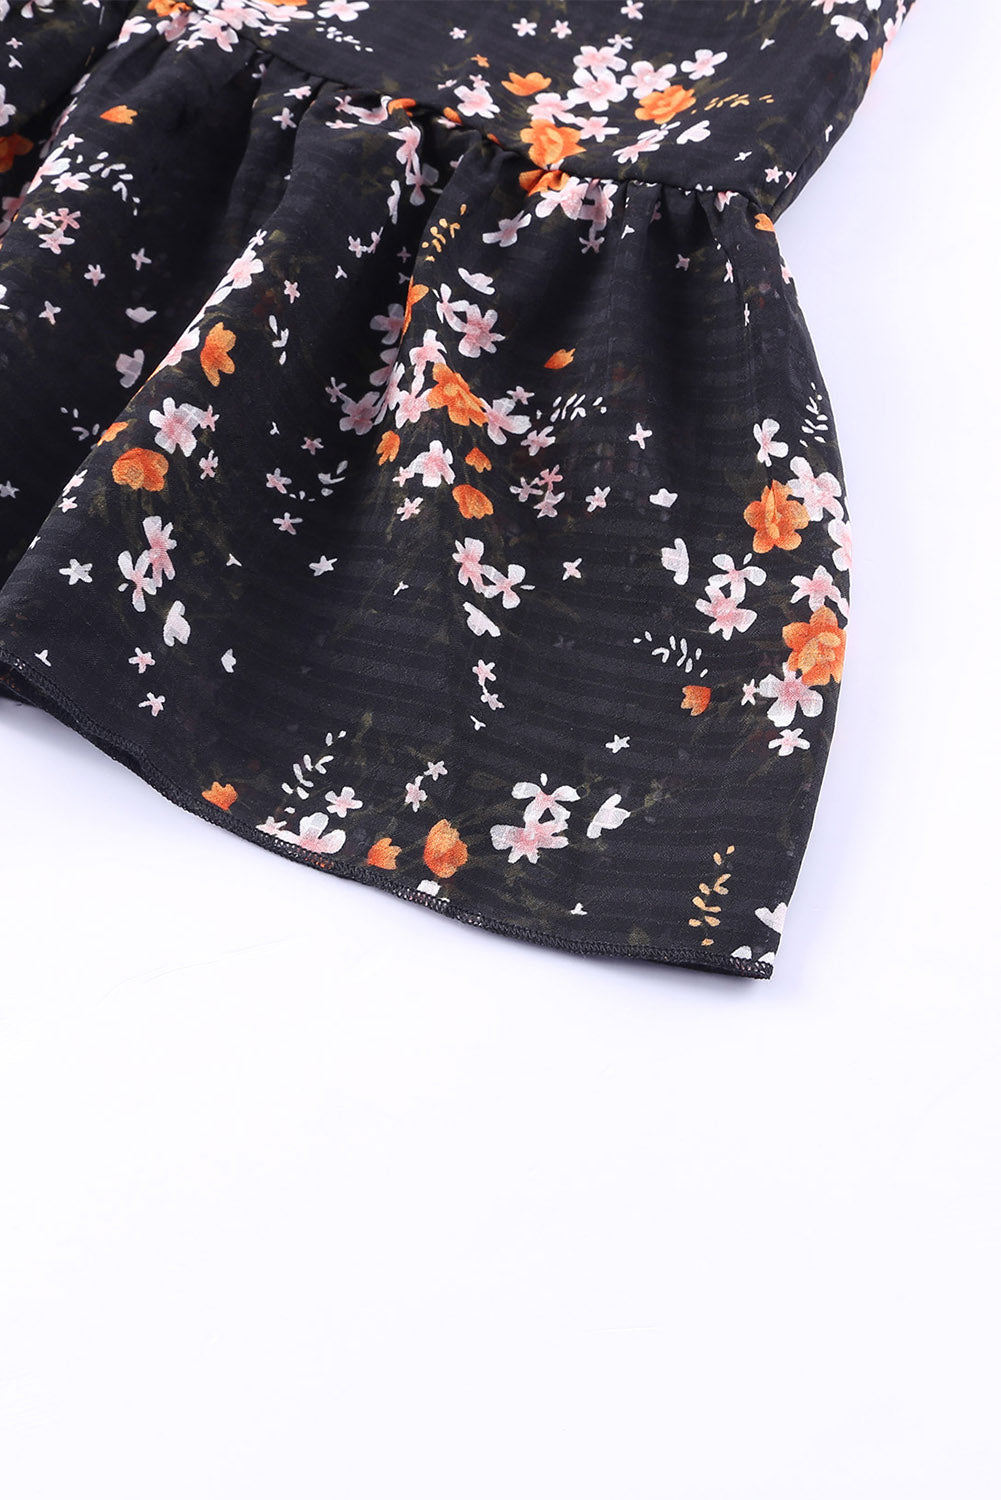 Black Dainty Floral Print Flowy Kimono